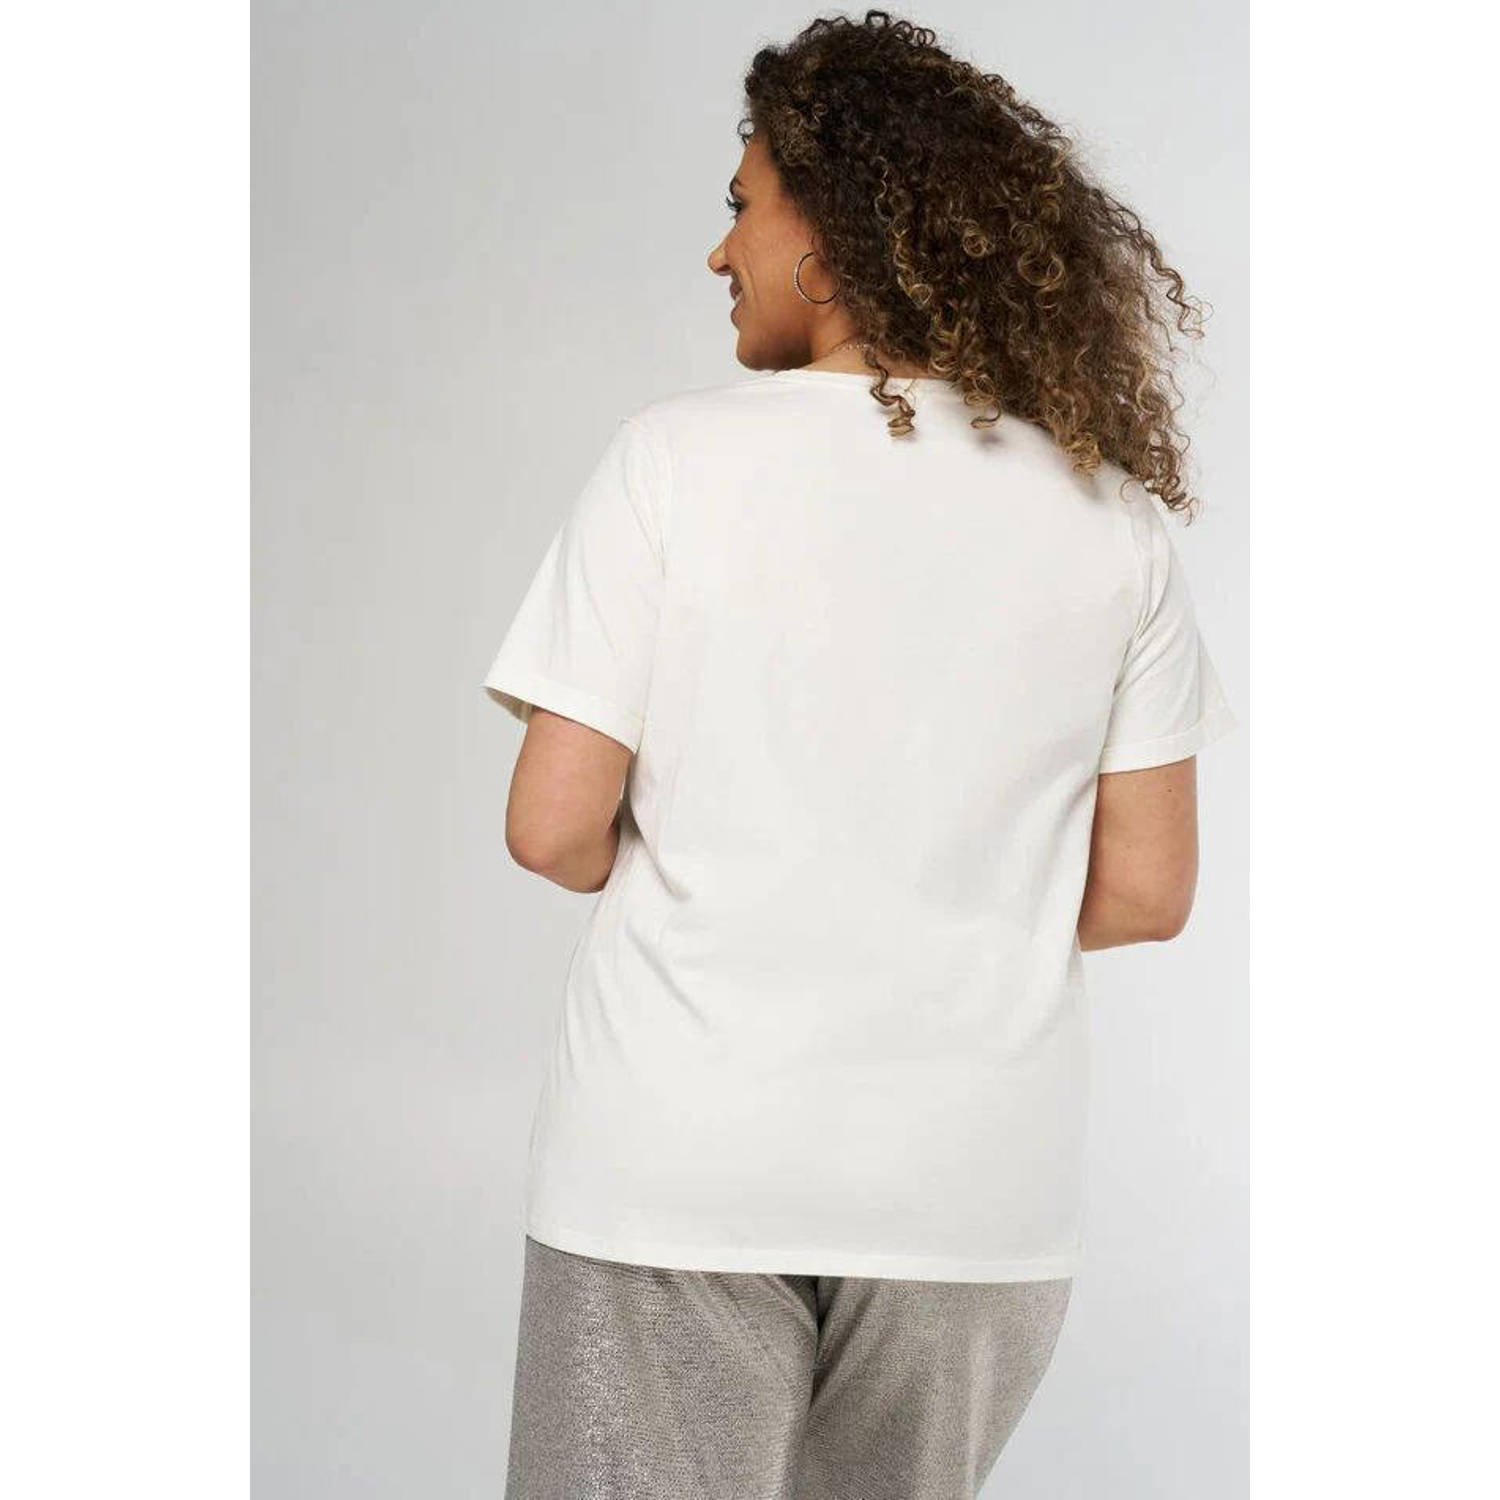 MS Mode T-shirt met printopdruk en borduursels wit